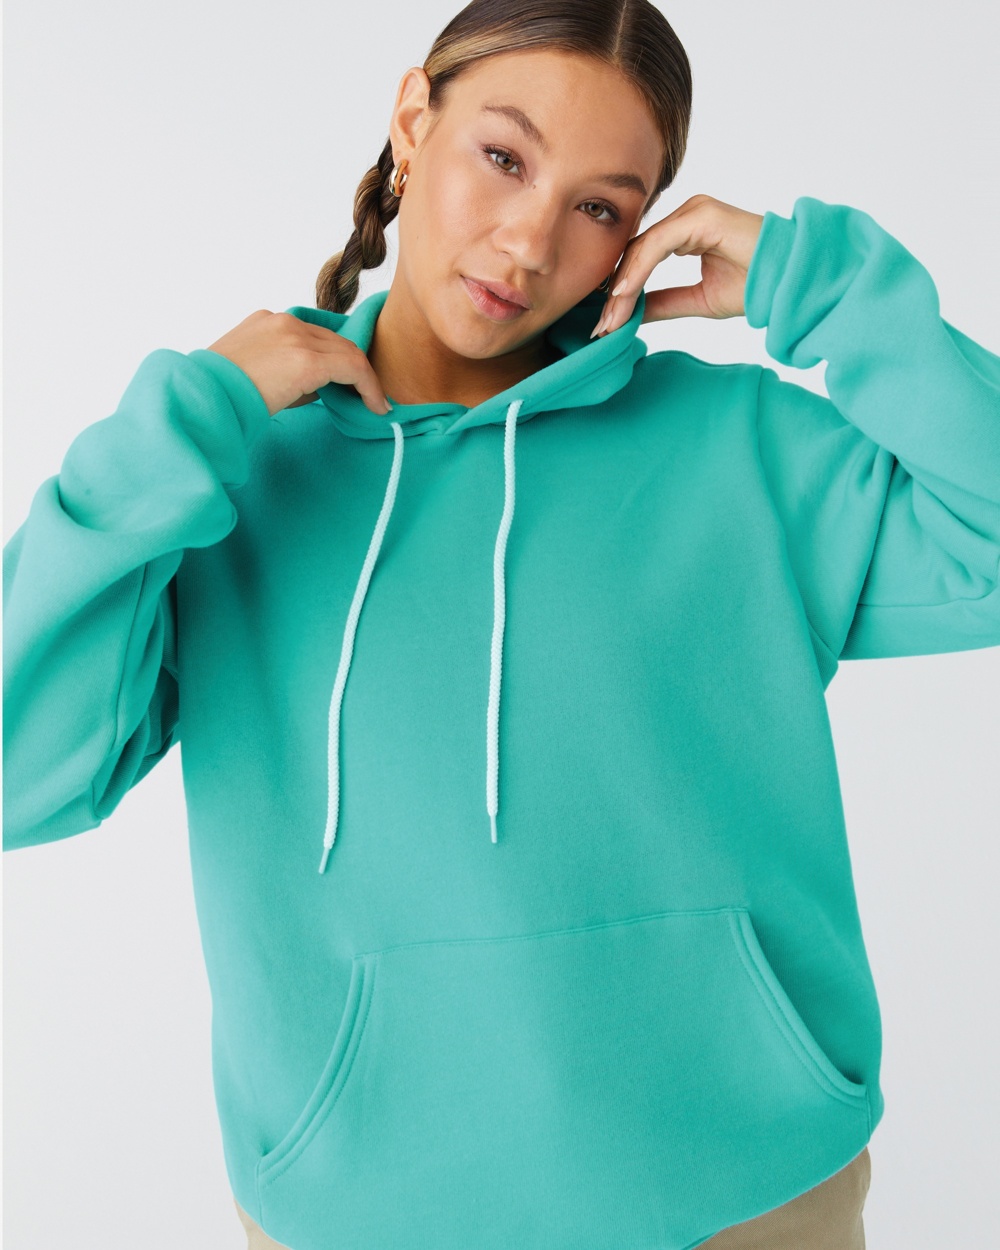 Malibu Fleece Sweatshirt for Women in Light Grey